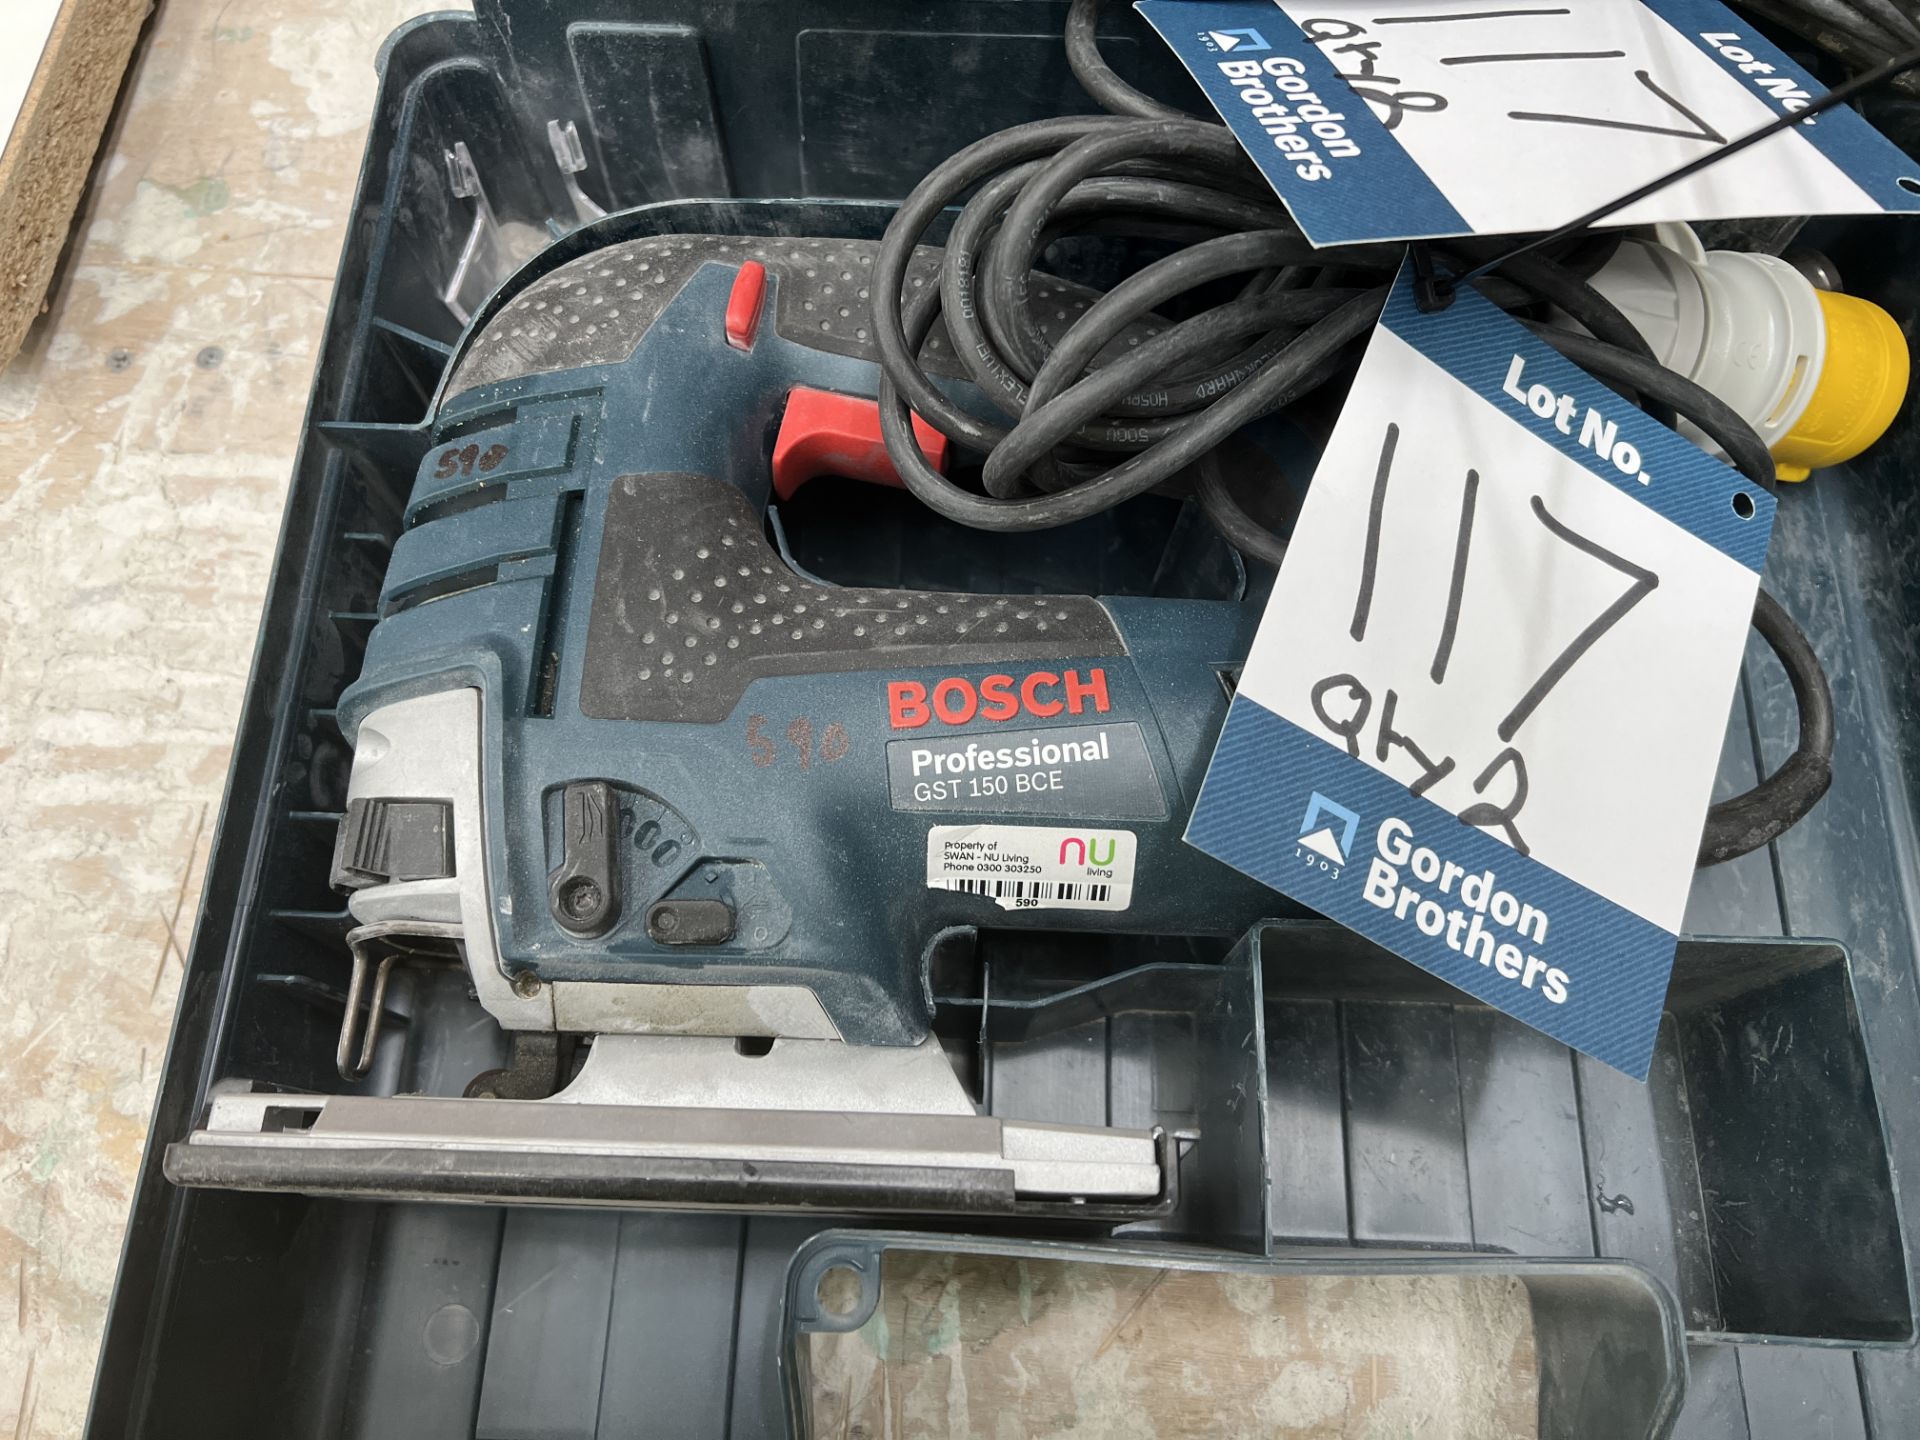 2x no.) Bosch, Professional GST150 BCE jigsaws, 110 volts (DOM: 2018) - Image 4 of 4